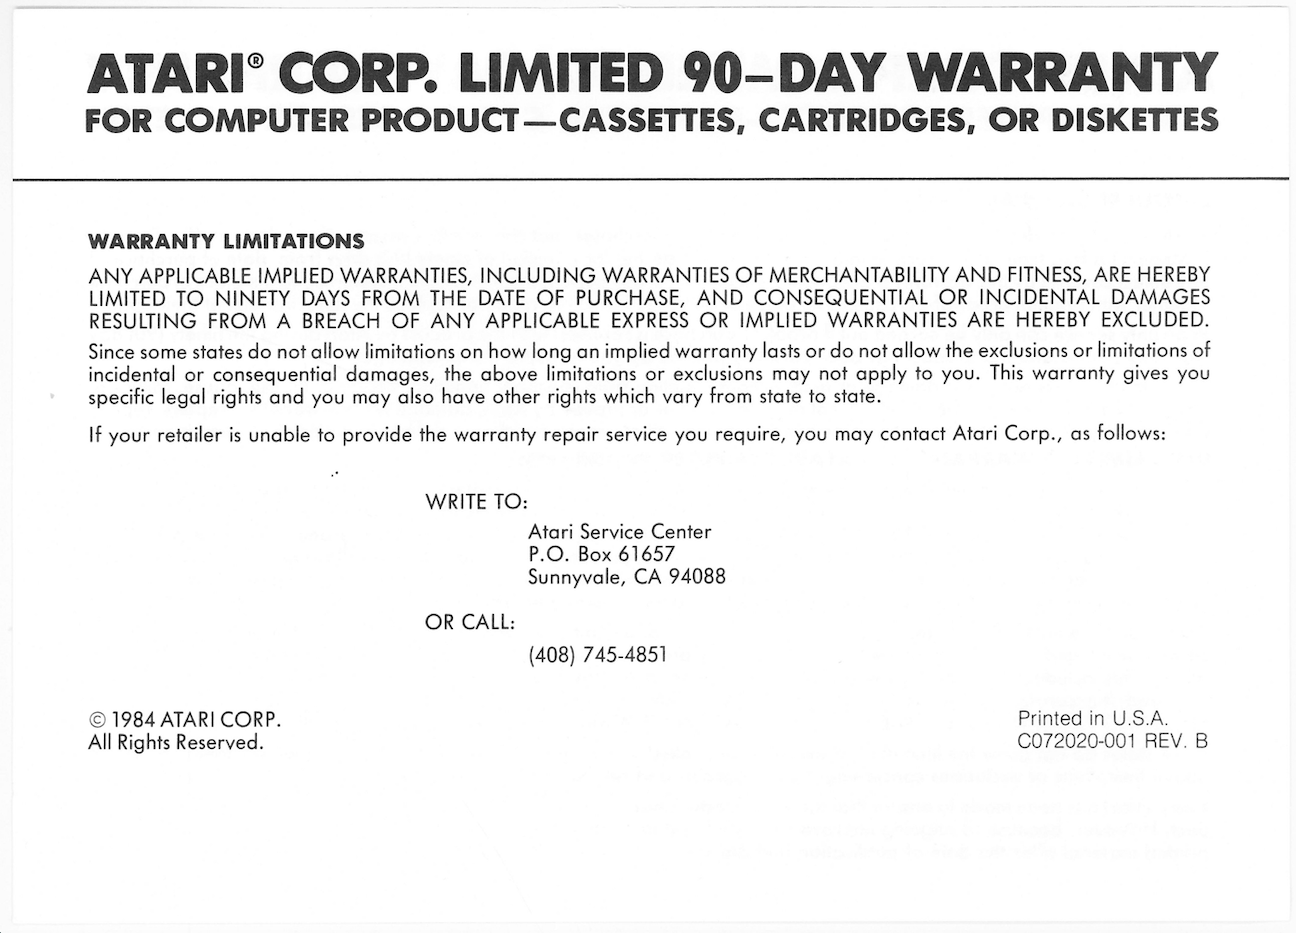 Atari Proofreader/Limited 90-Day Warranty C072020-001 REV. B-back.png